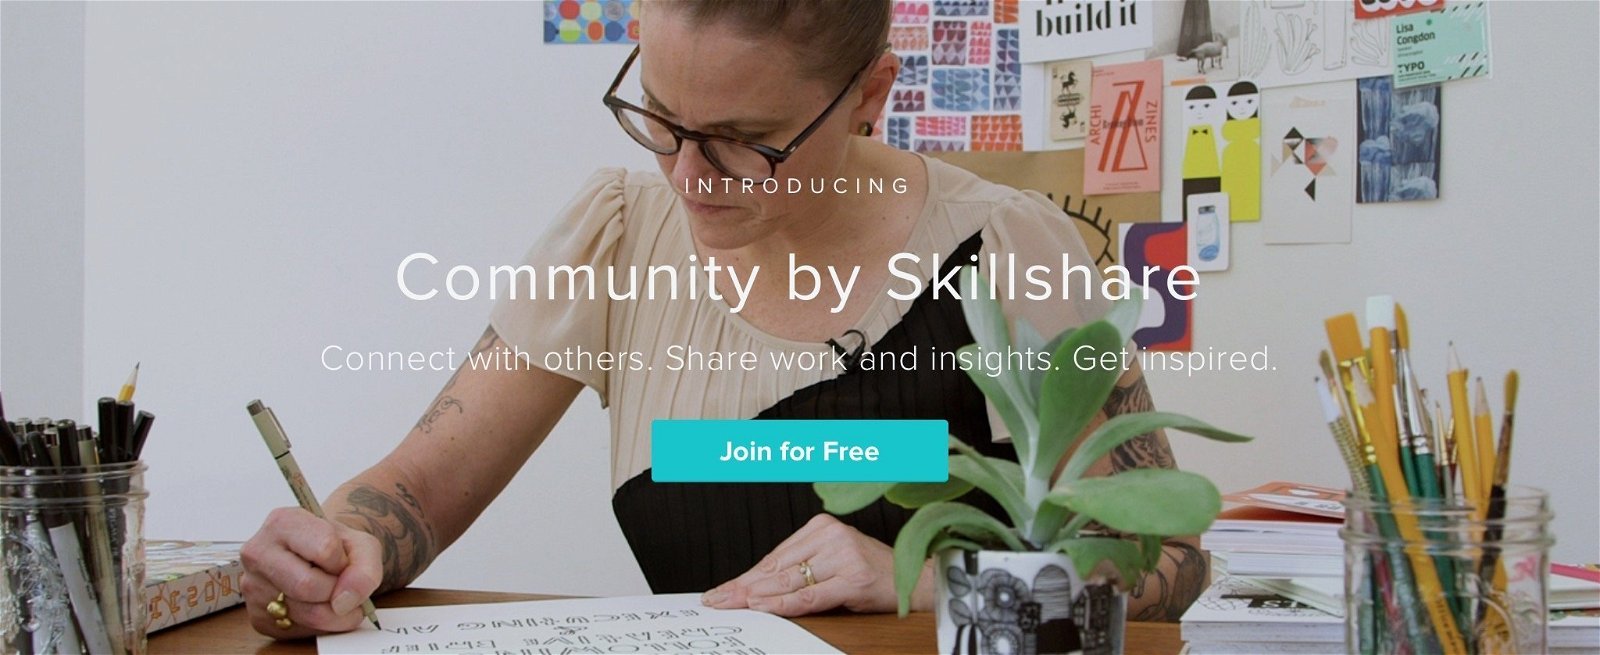 Skillshare Community